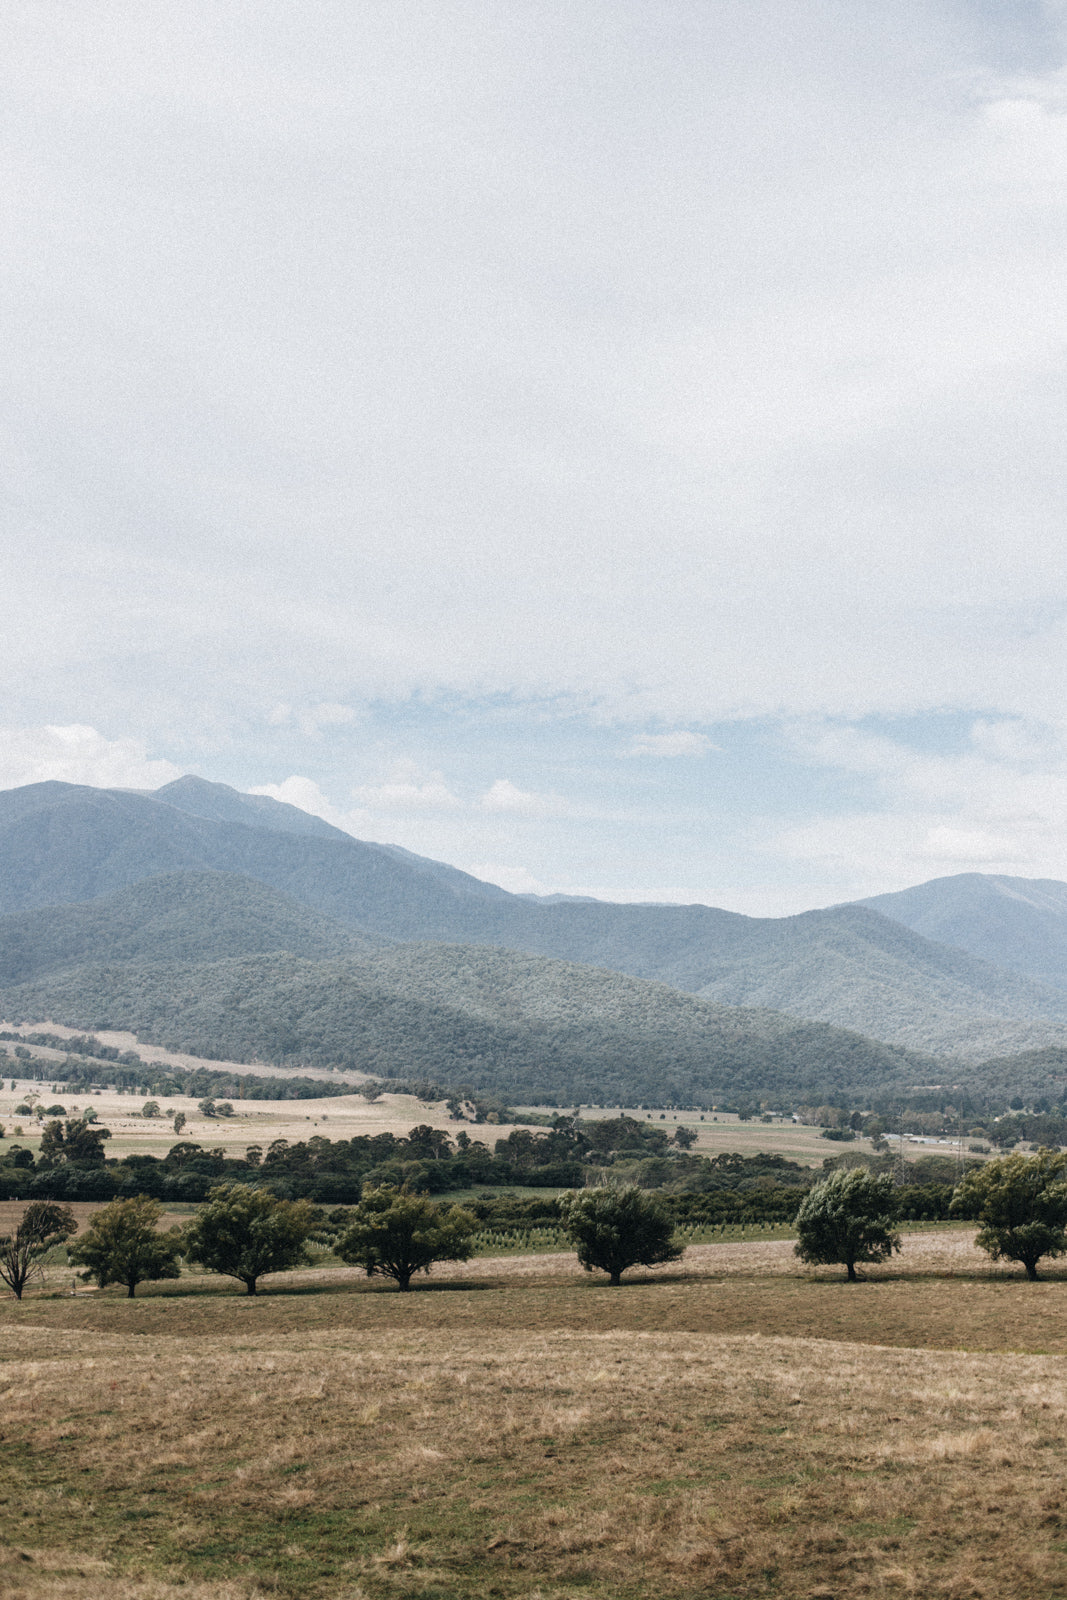 Looking across the Kiewa Valley towards Mt Bogong in regional Victoria.  Large blue/grey eucalyptus mountains.